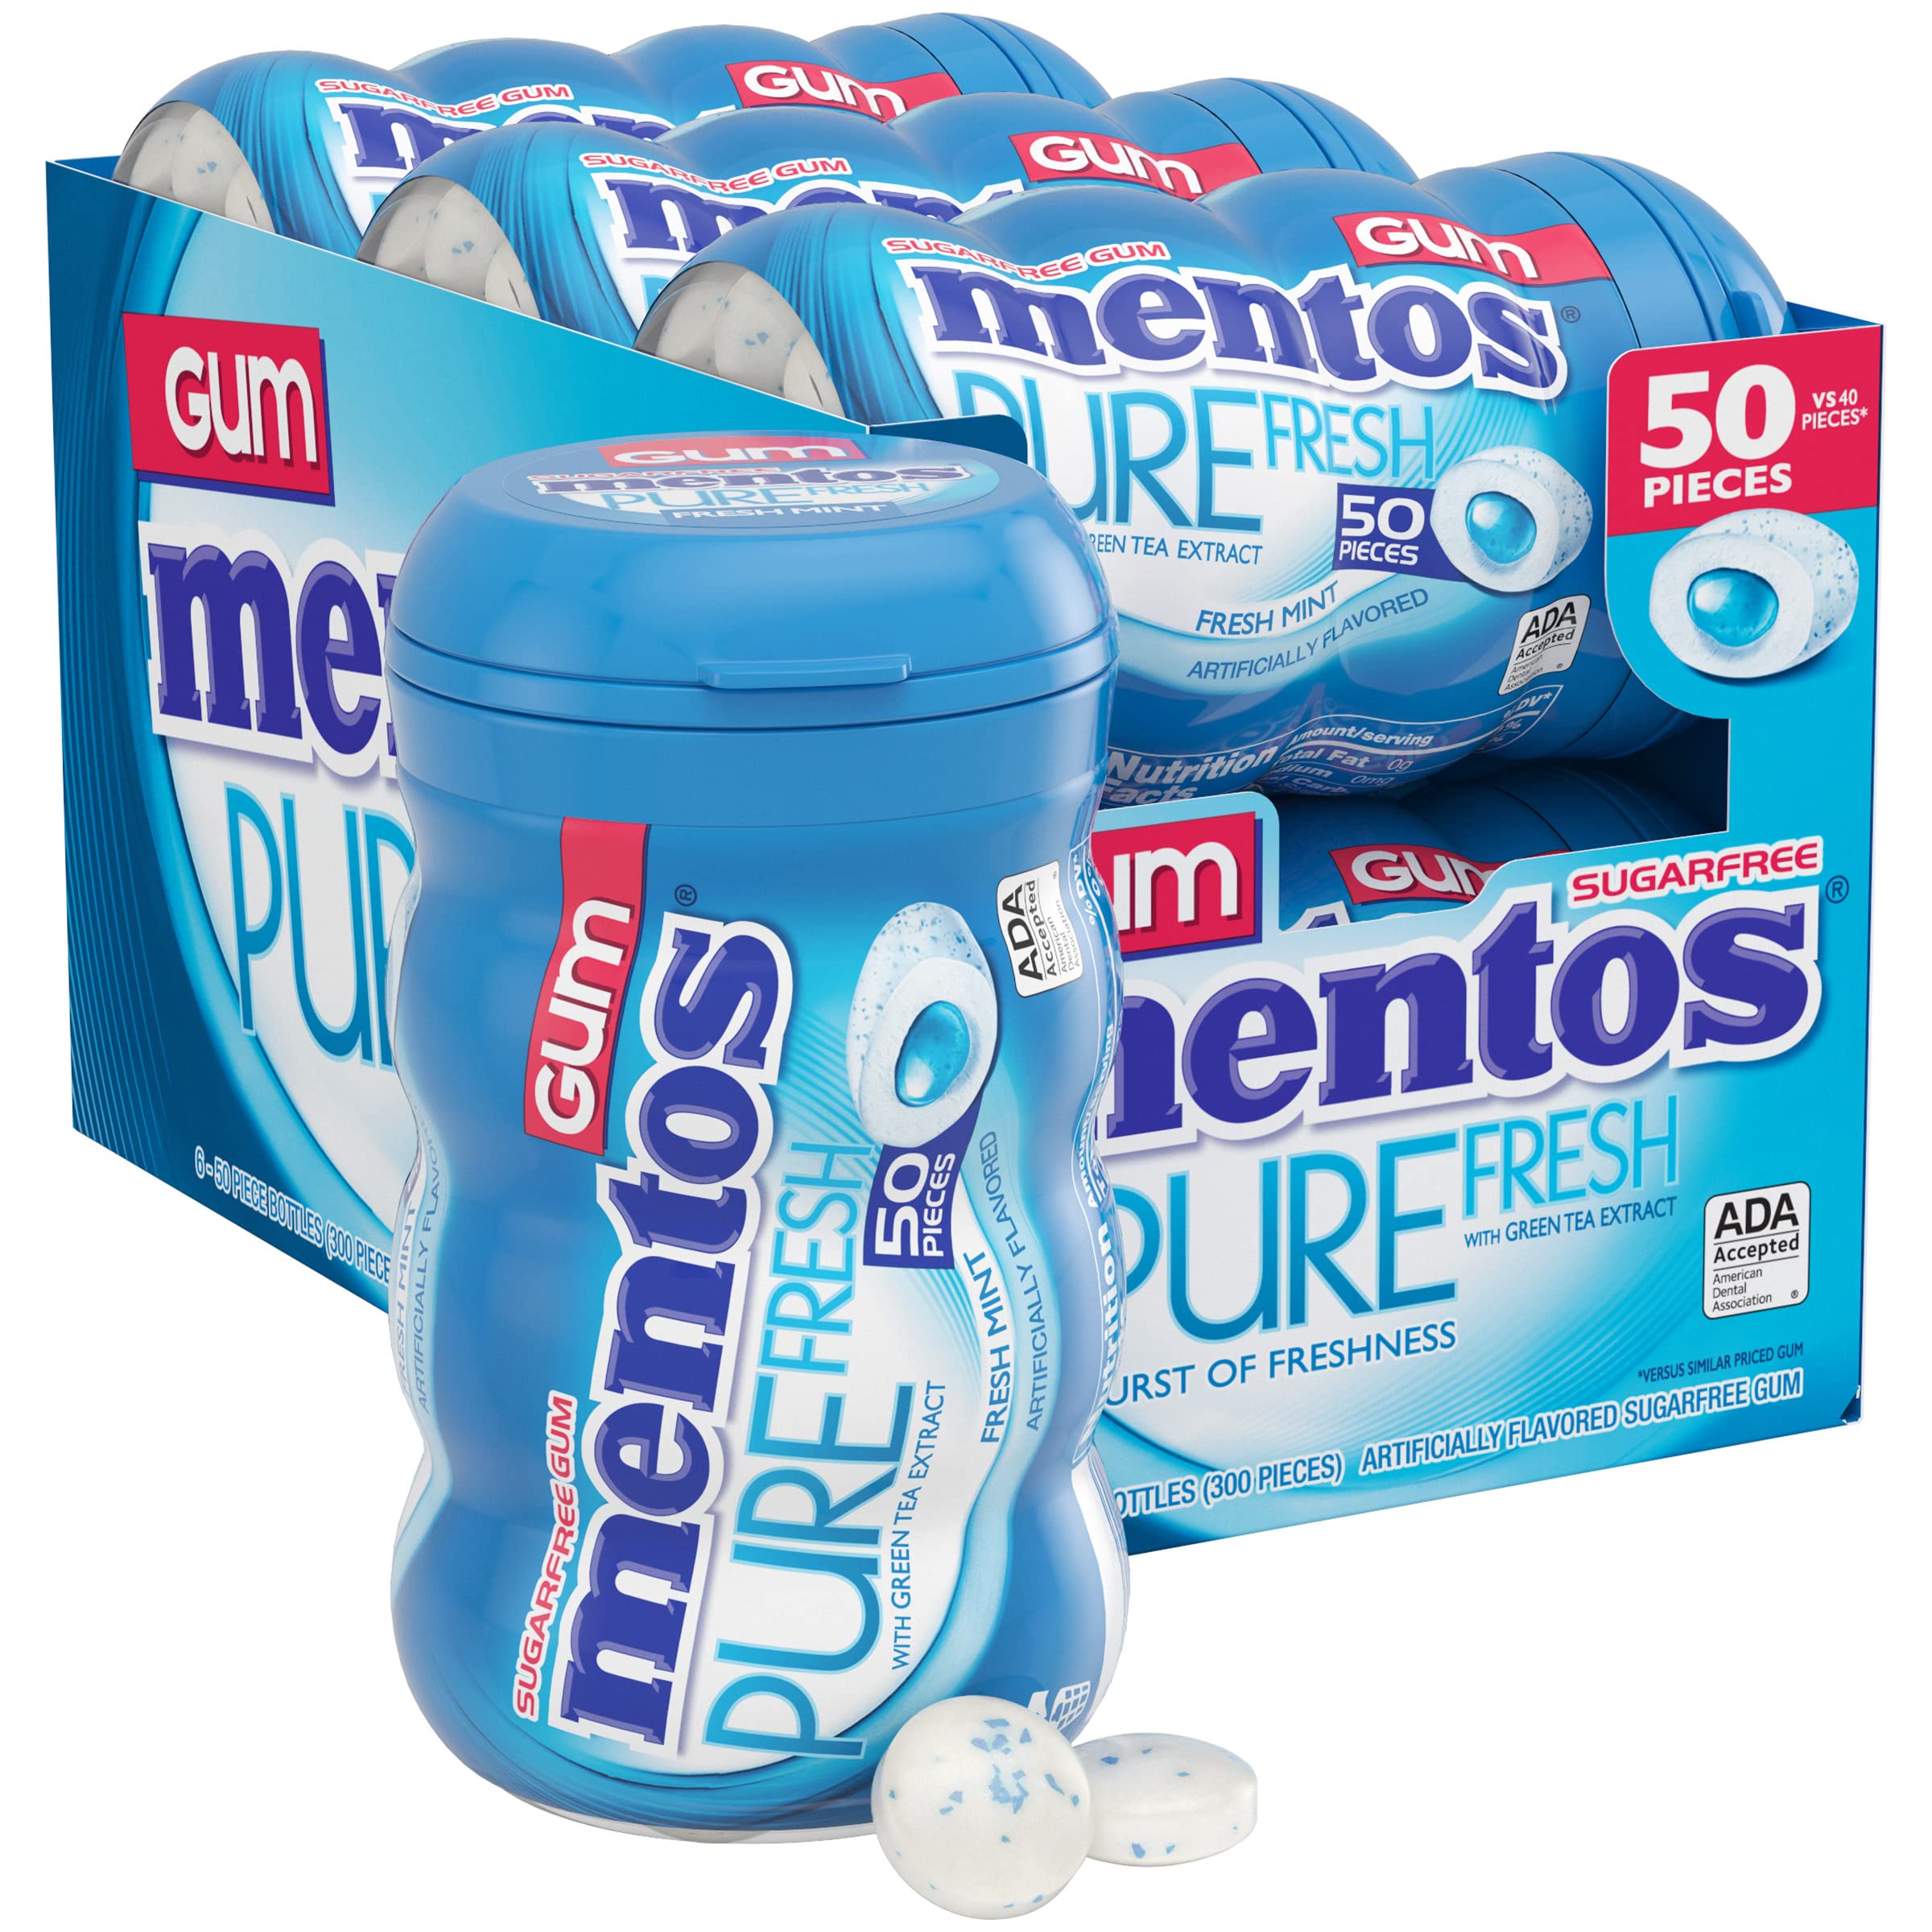 Mentos Gum Pure Fresh Sugarfree Chewing Gum, Bubble India